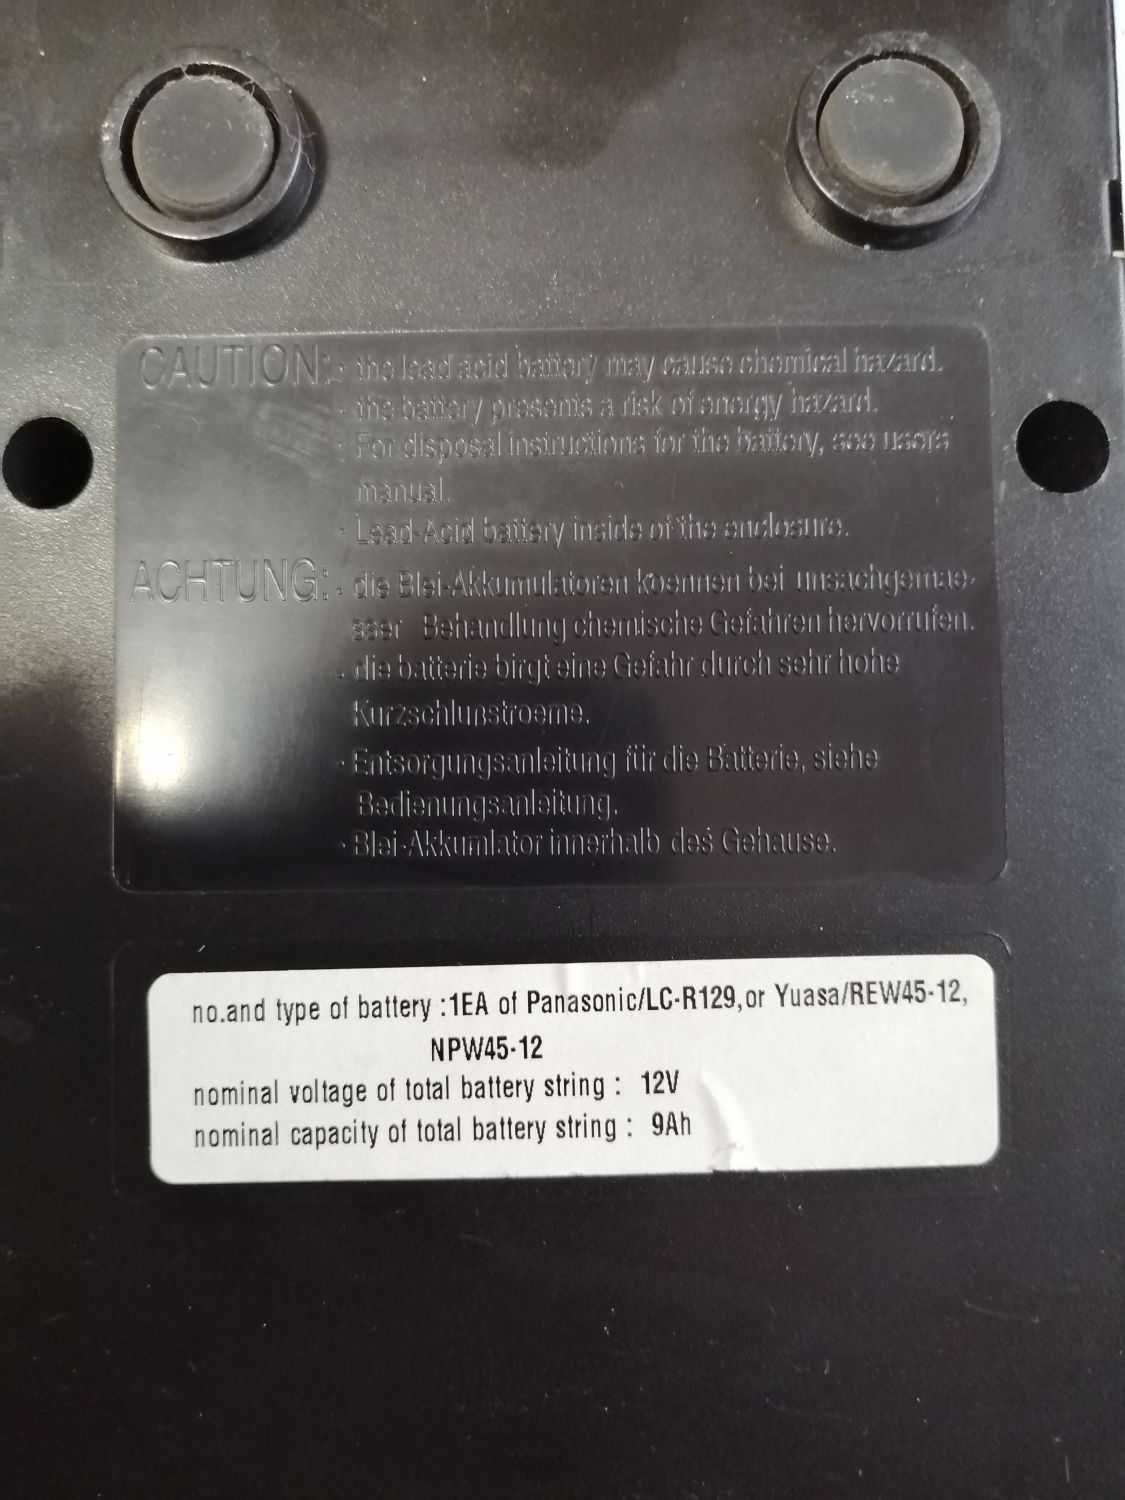 UPS Mustek PowerMust 800 USB 480W ИБП (требует ремонта) 2 шт